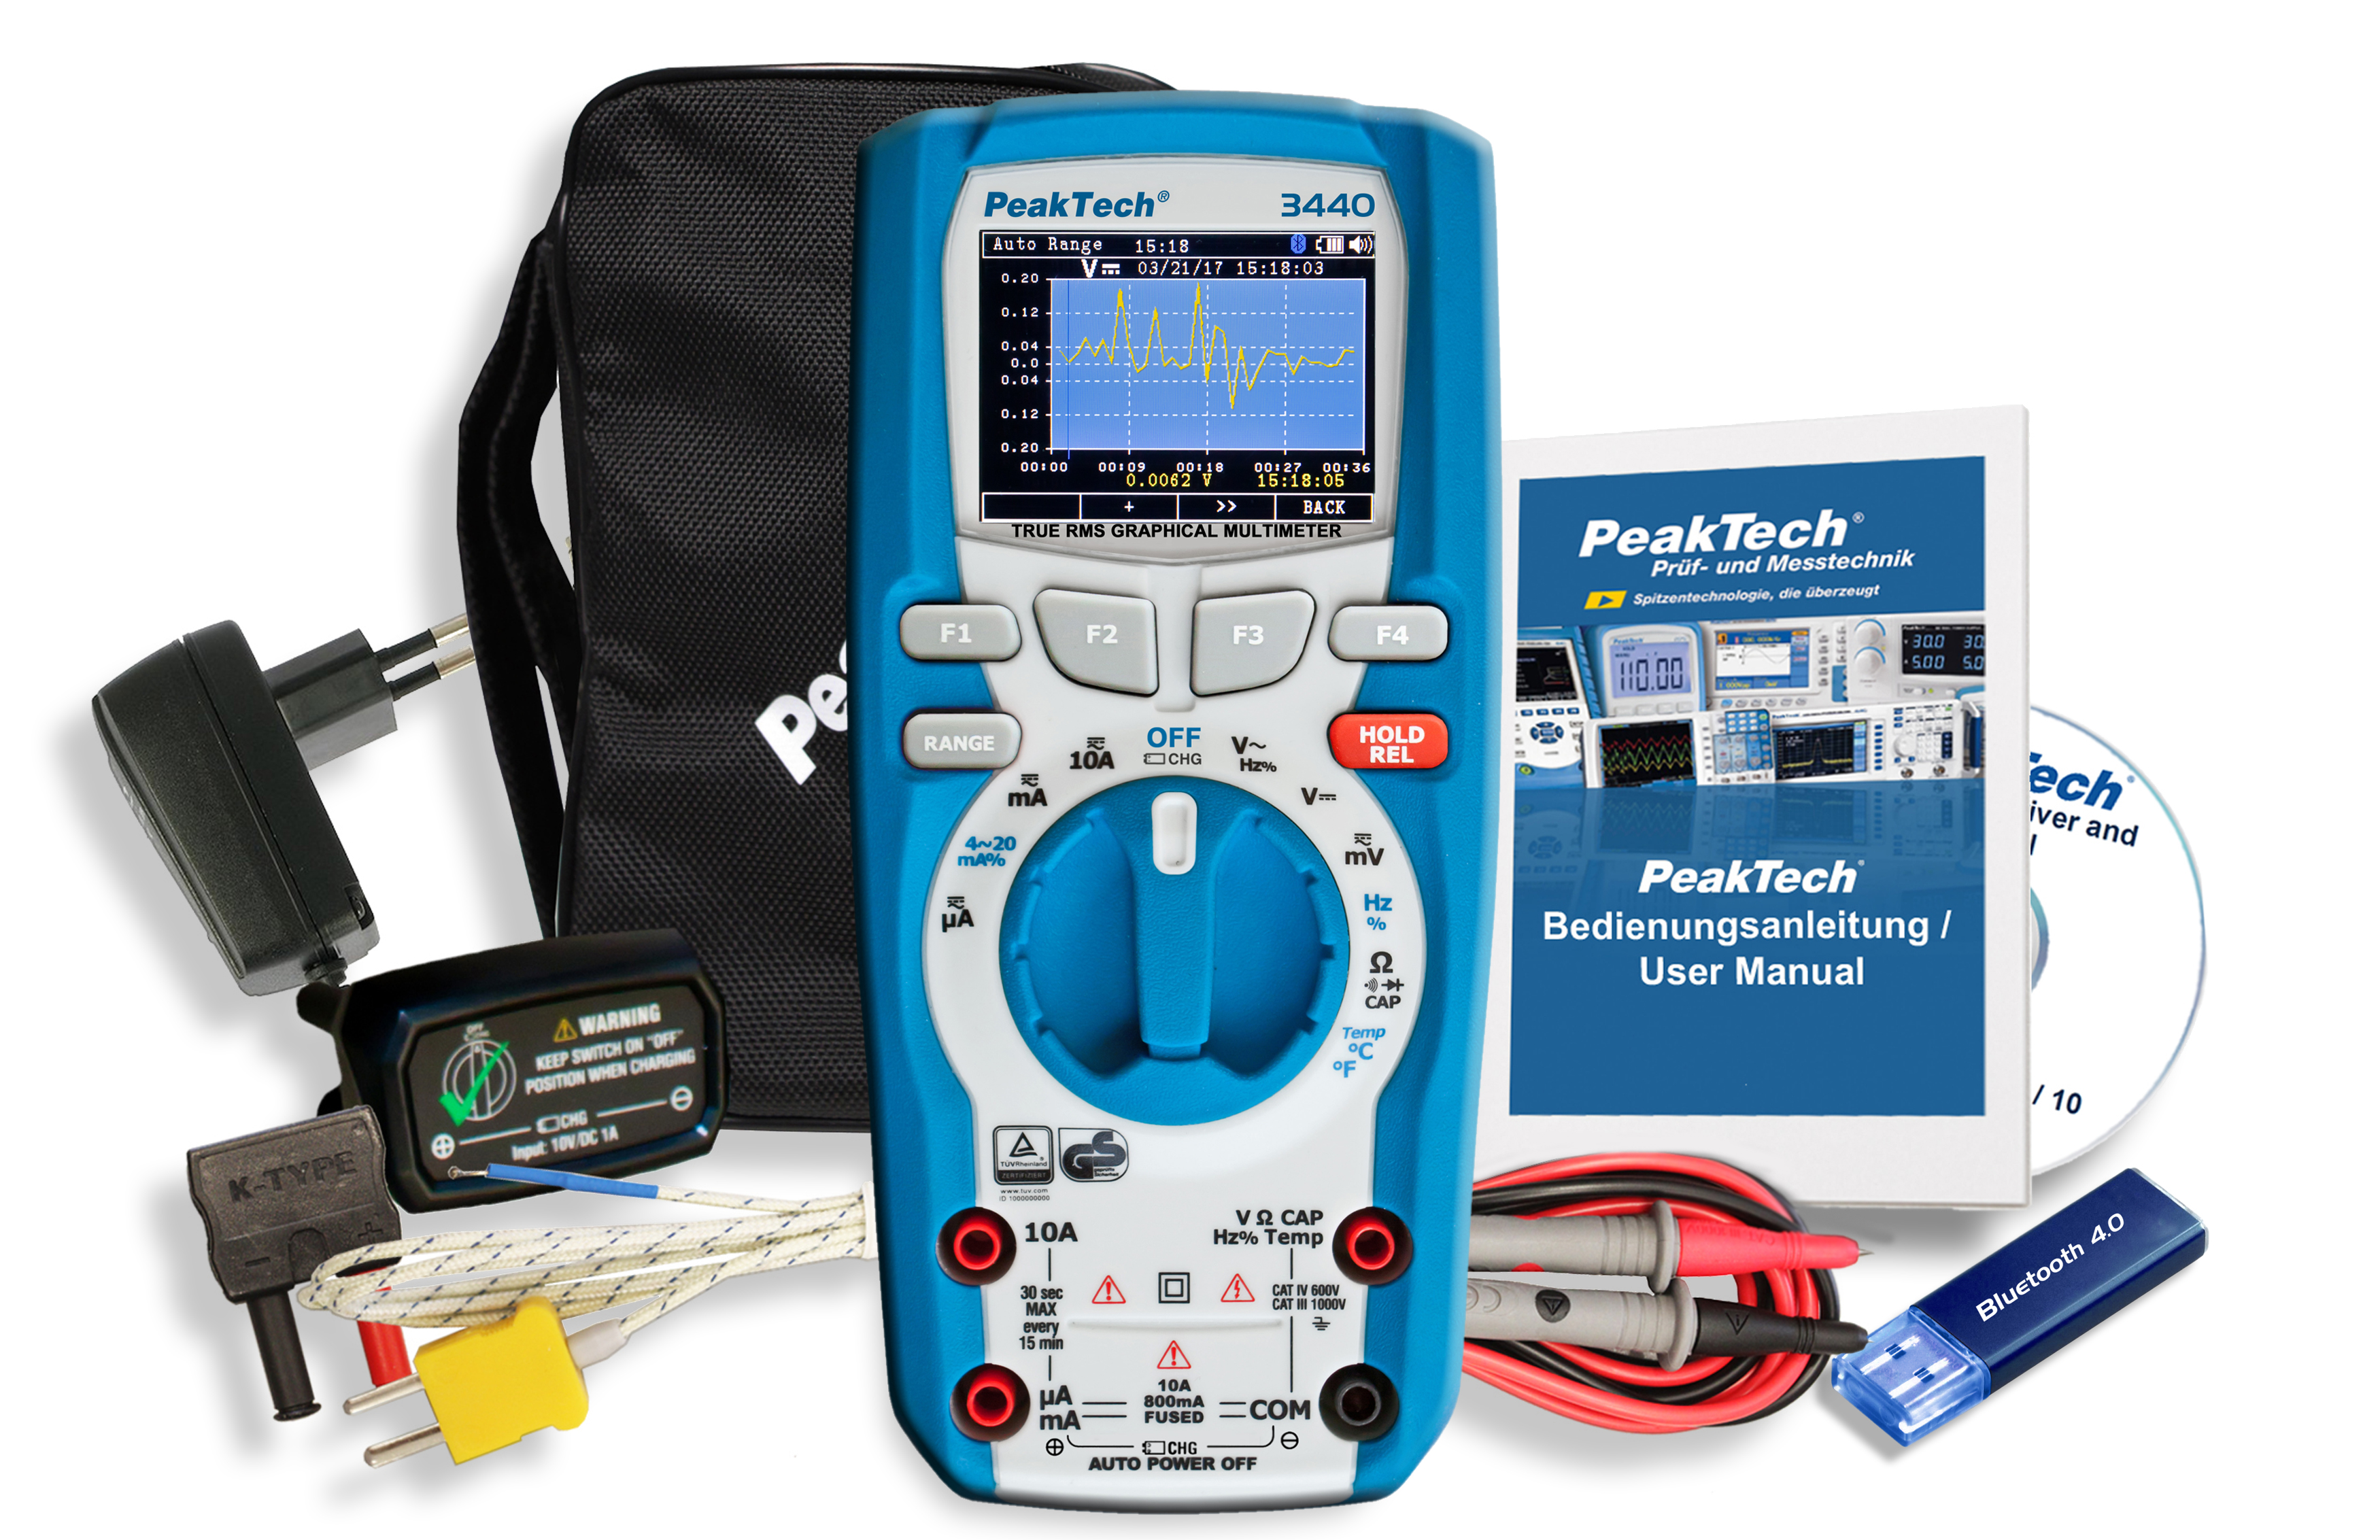 «PeakTech® P 3440» True RMS graphic multimeter 50,000 counts